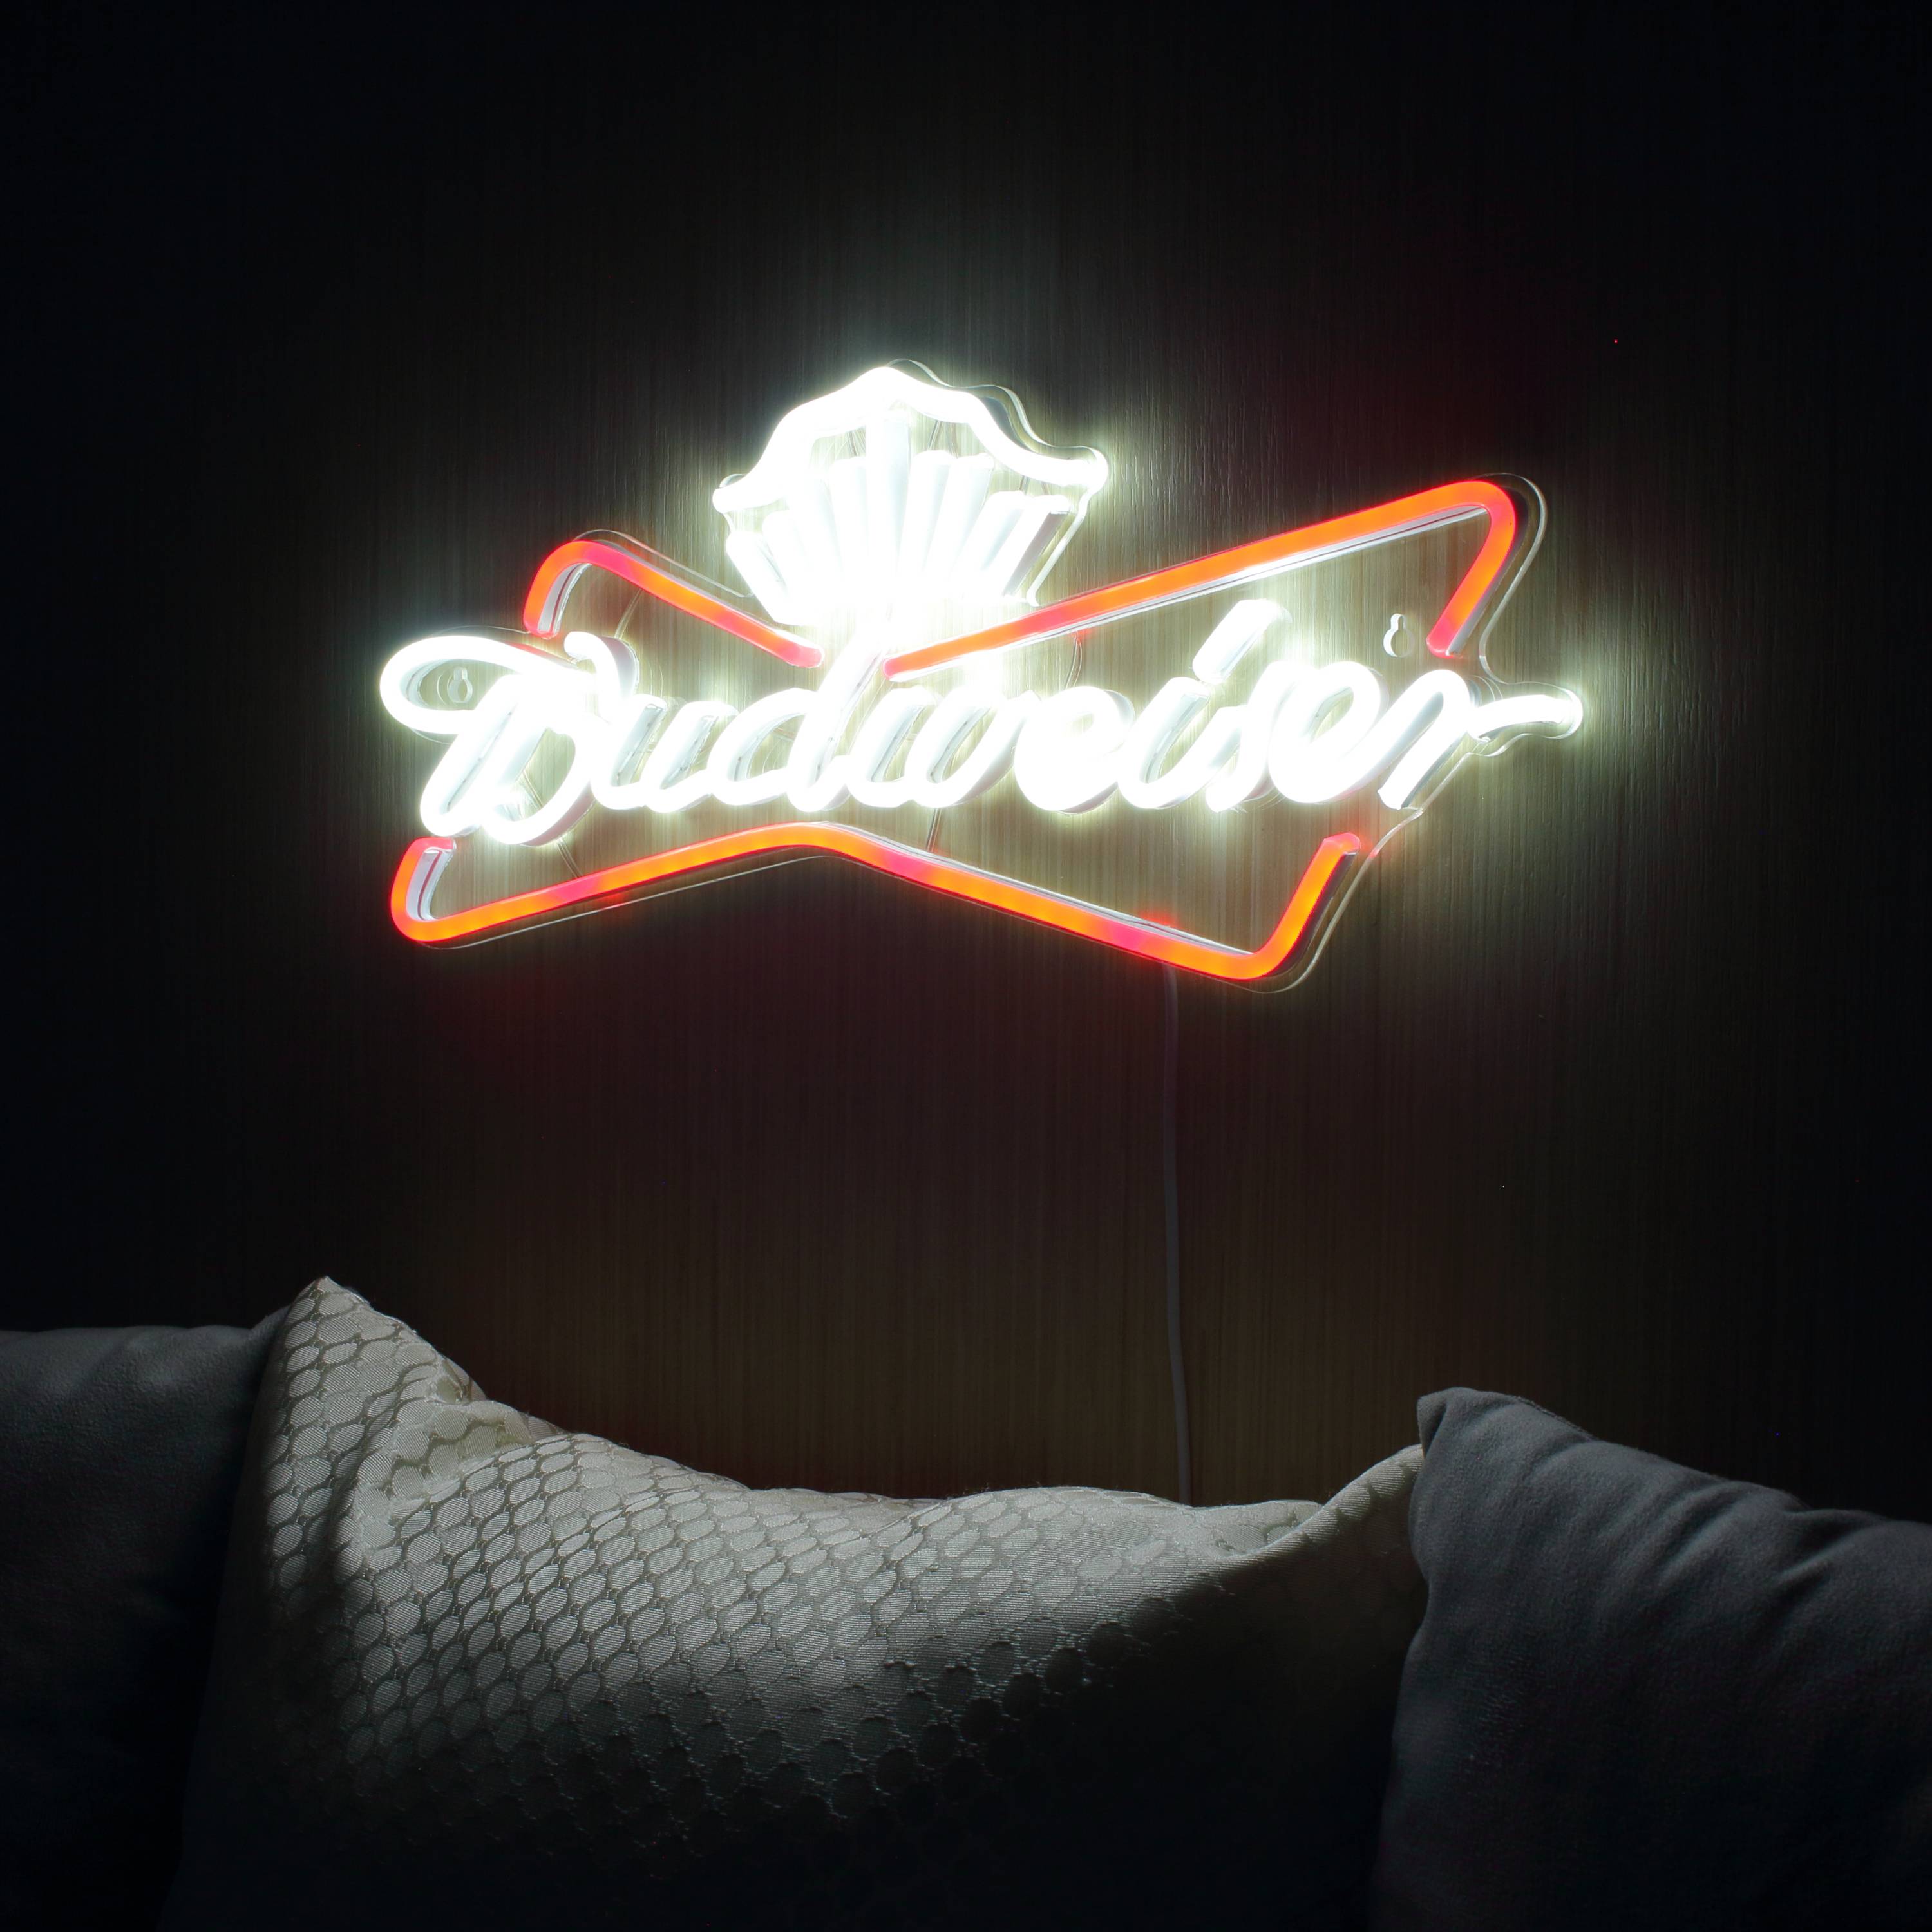 Budweiser Large Flex Neon LED Sign